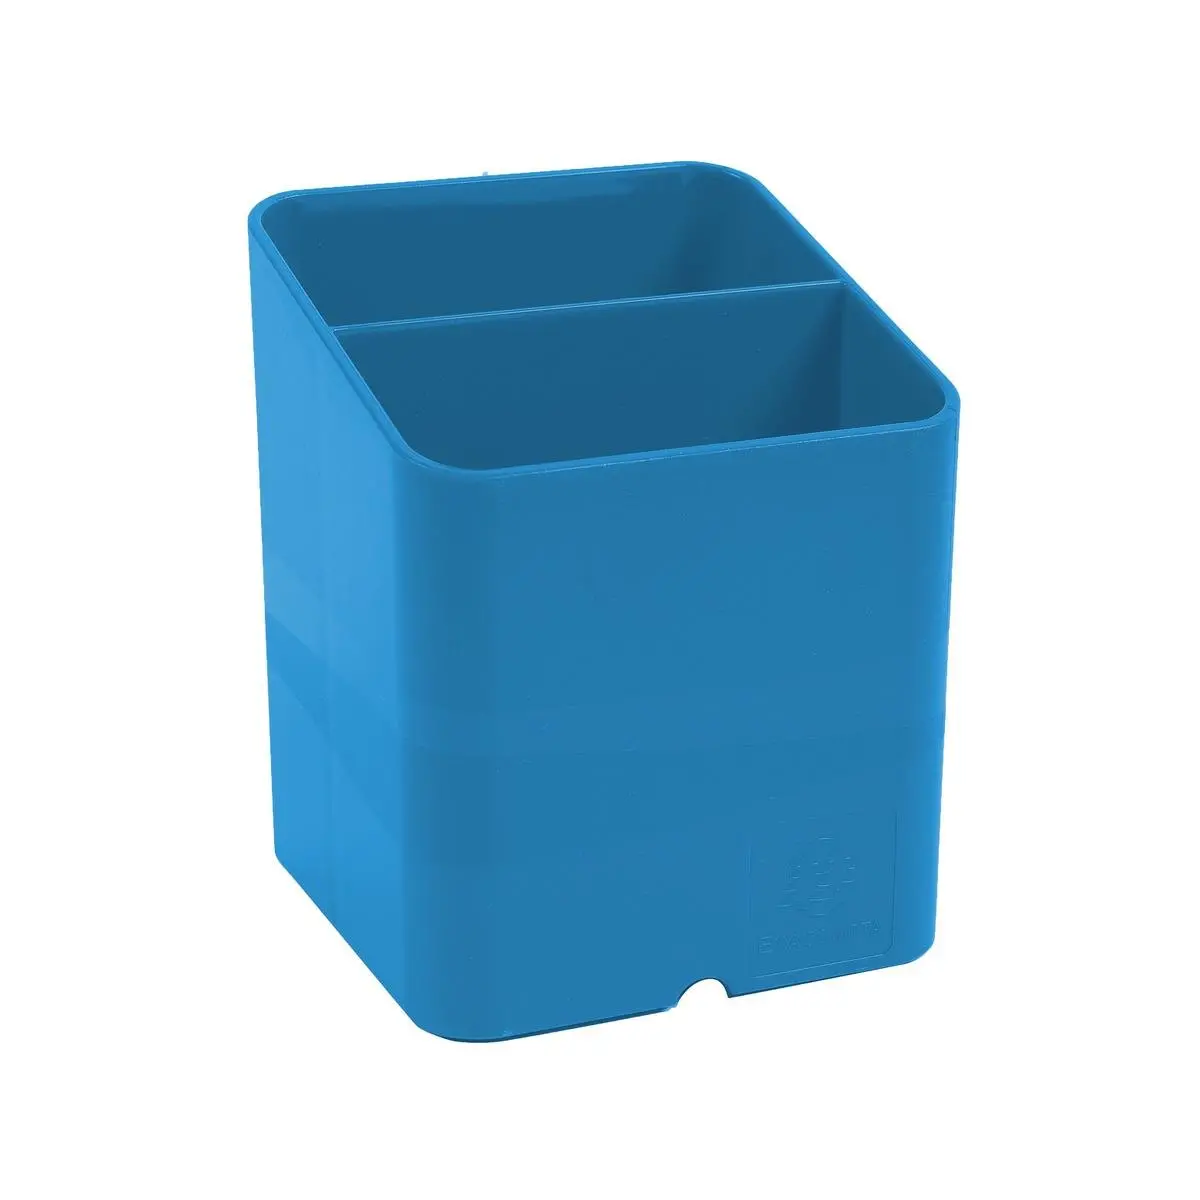 Pot a crayons bleu CleanSafe photo du produit